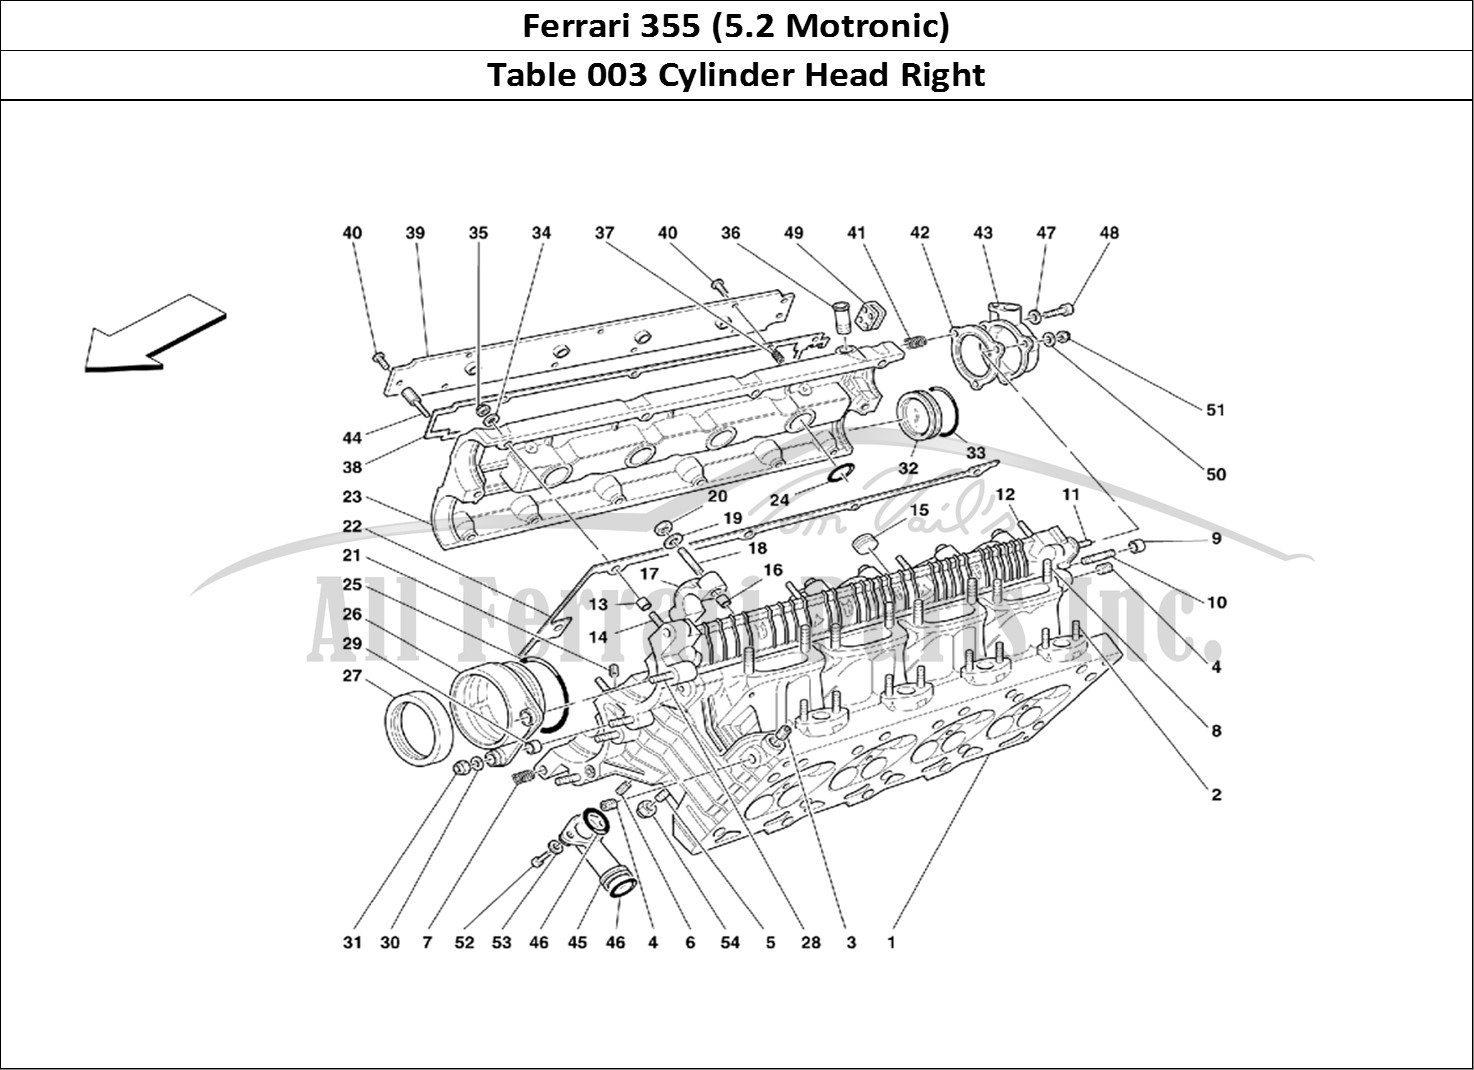 Ferrari Parts Ferrari 355 (5.2 Motronic) Page 003 R.H. Cylinder Head